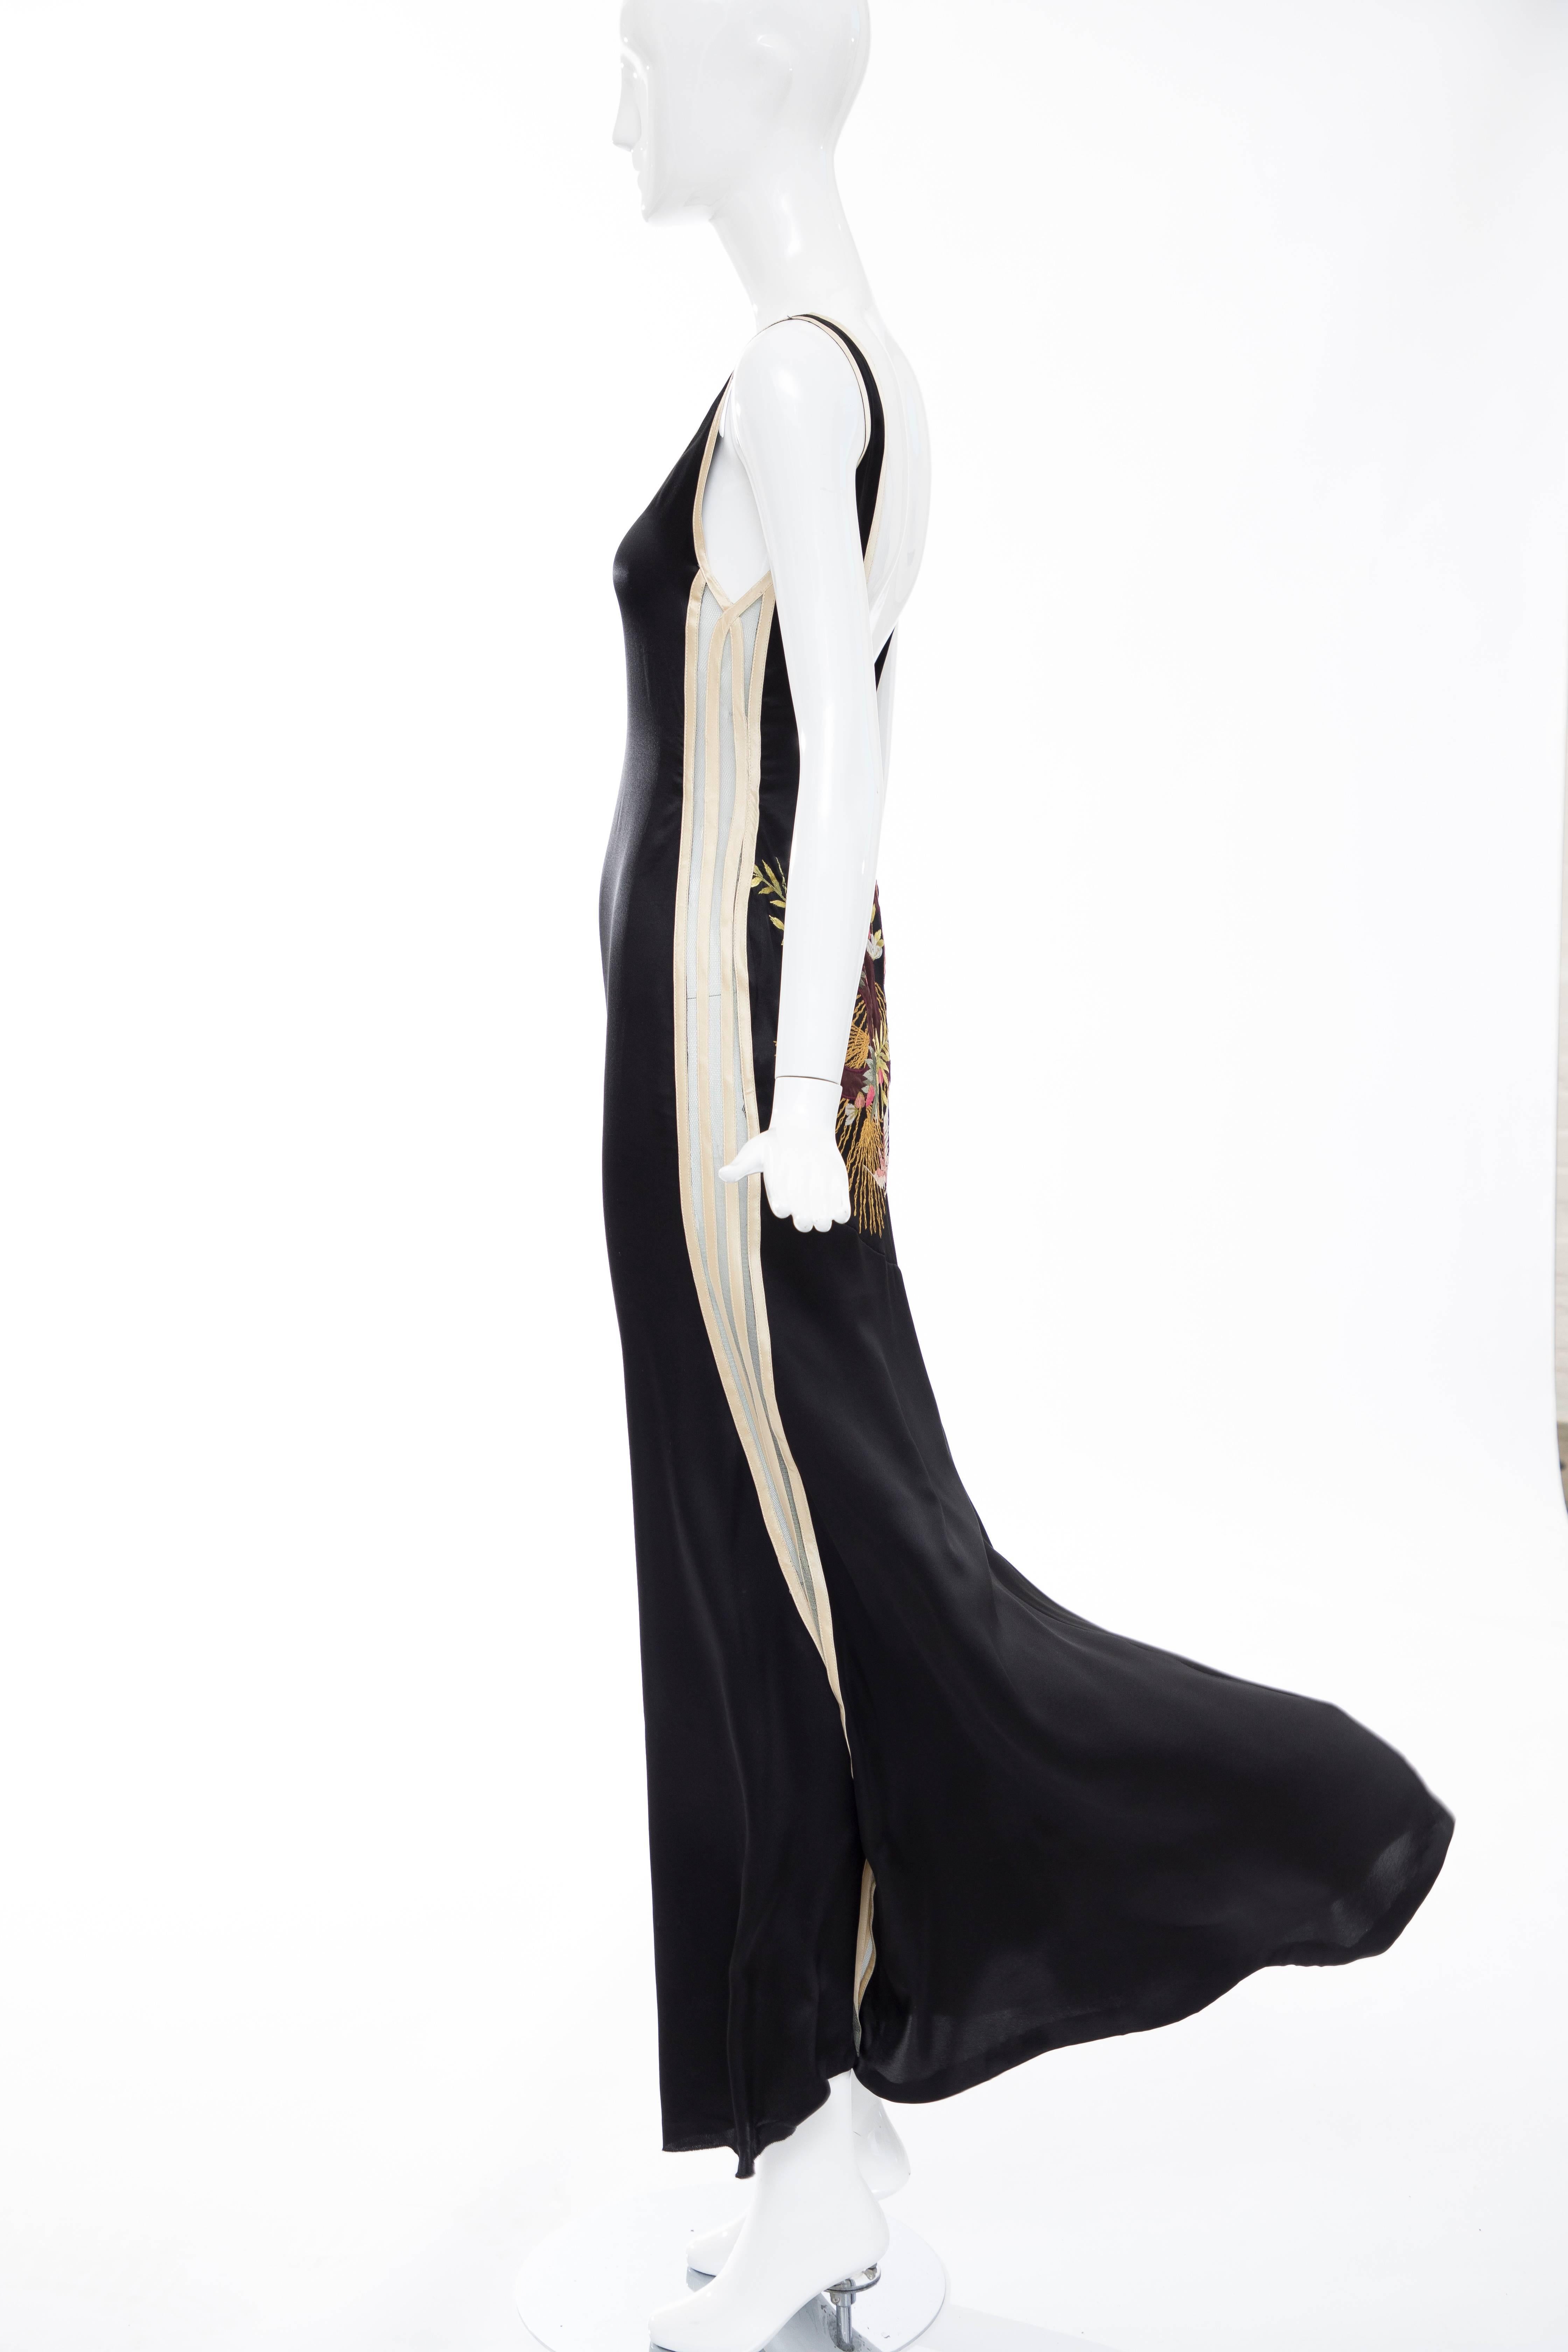 Jean Paul Gaultier Silk Embroidered Evening Dress, Spring 2007 1